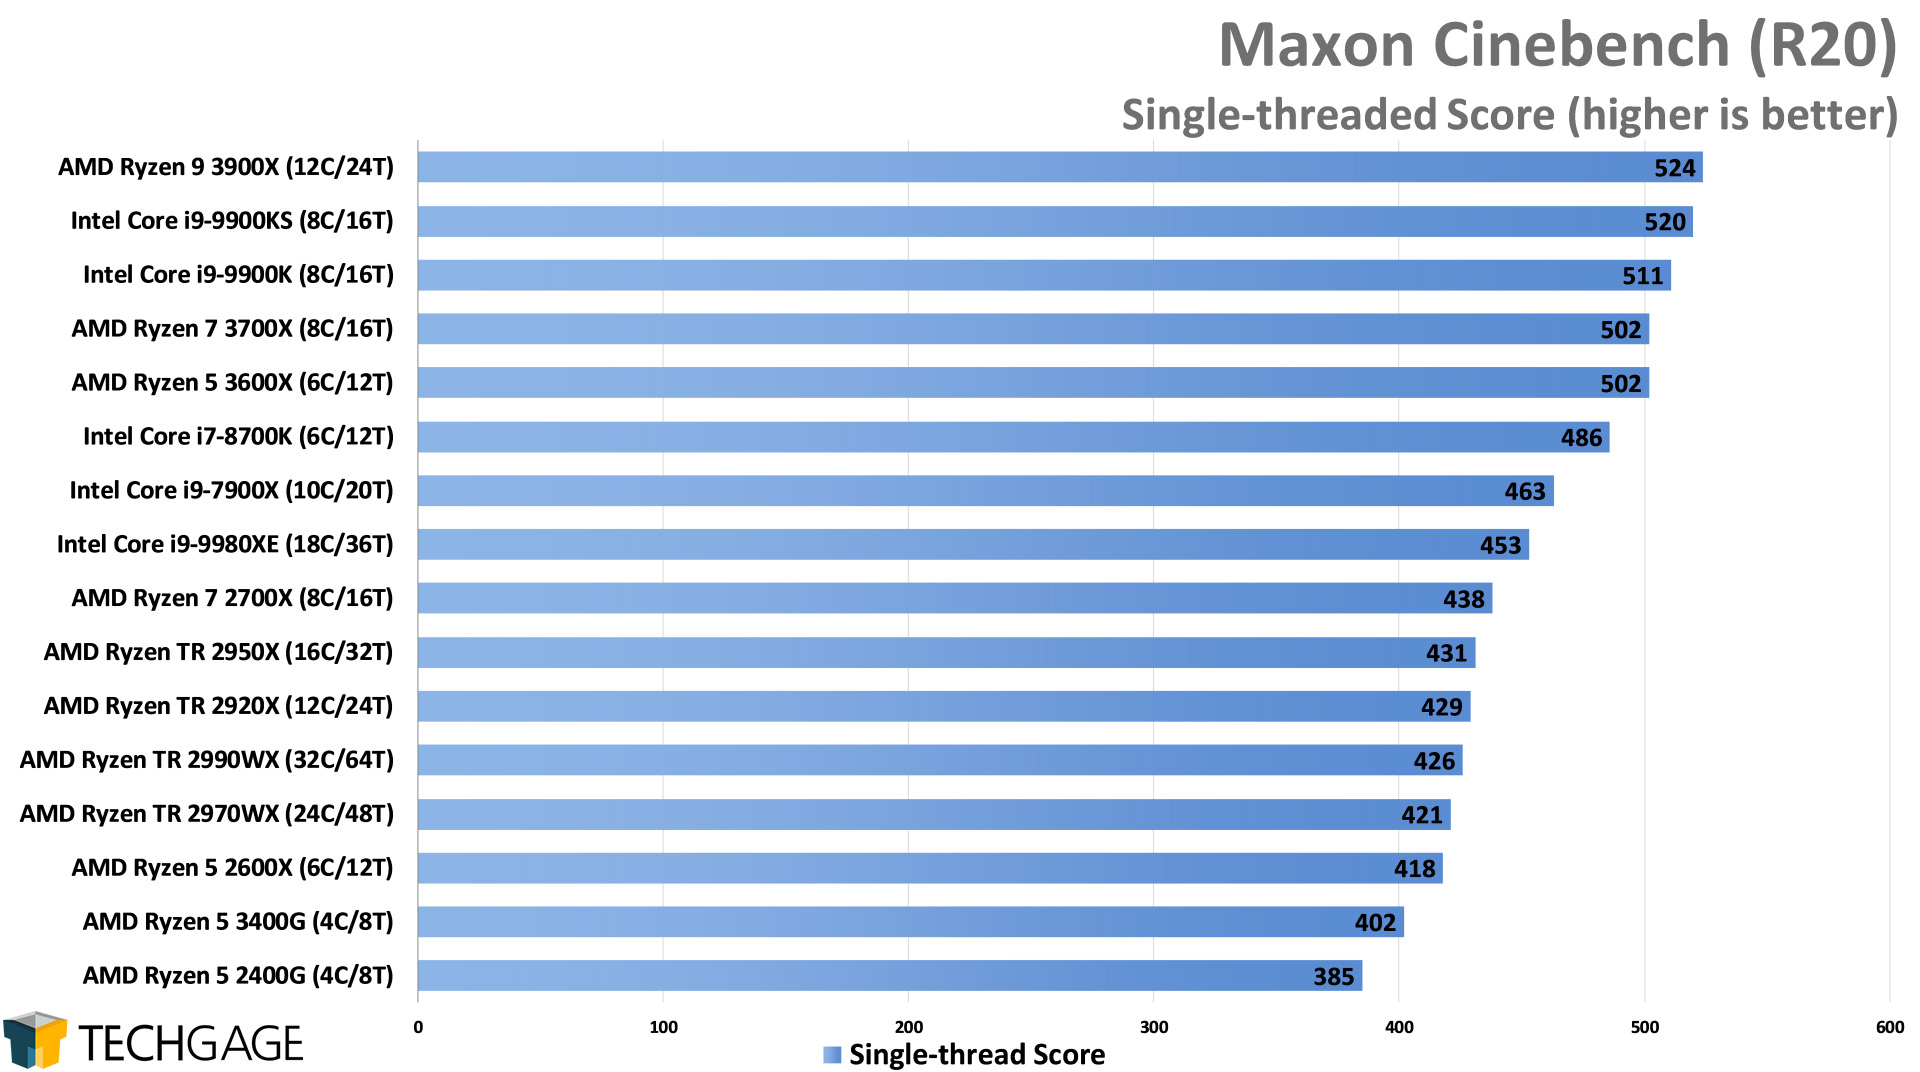 Maxon Cinebench R20 - Single-threaded Score (Intel Core i9-9900KS)